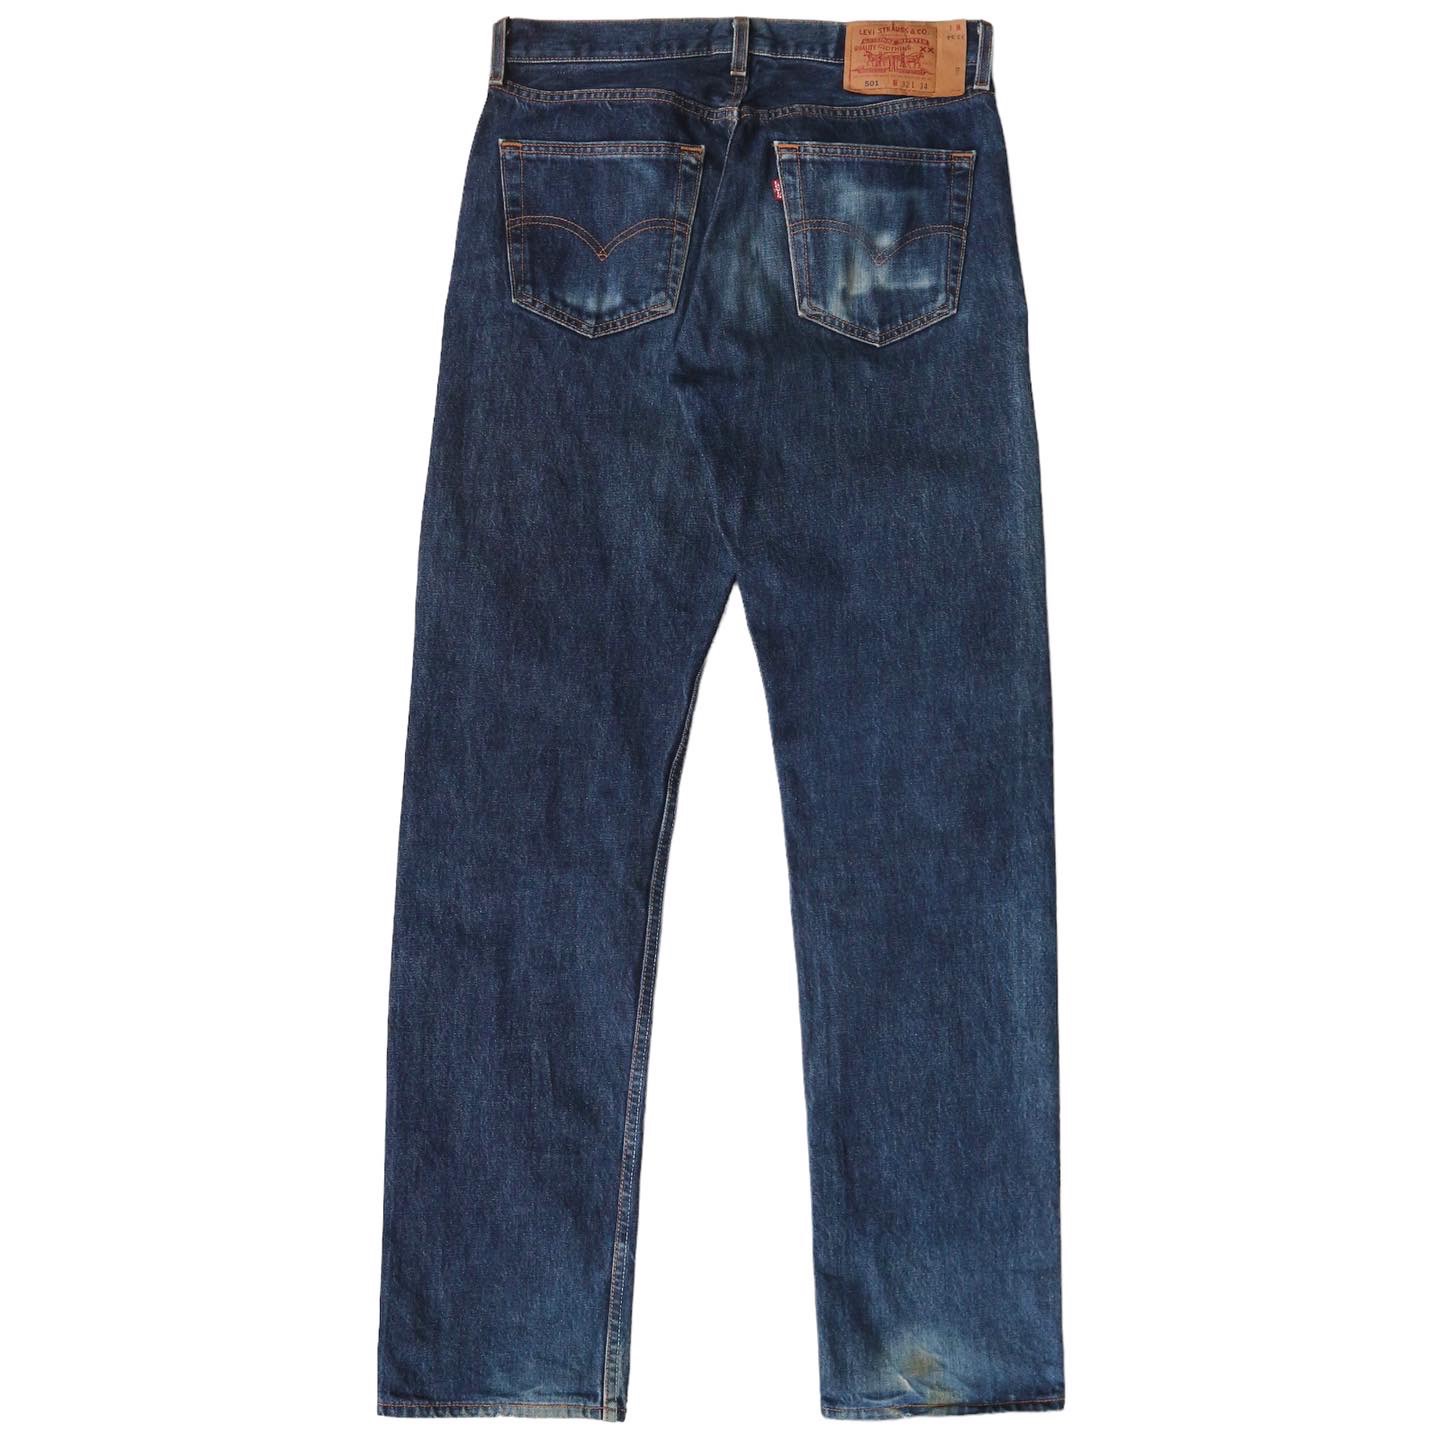 90s Levi's 501 USA Denim Jeans Size 31 denimister